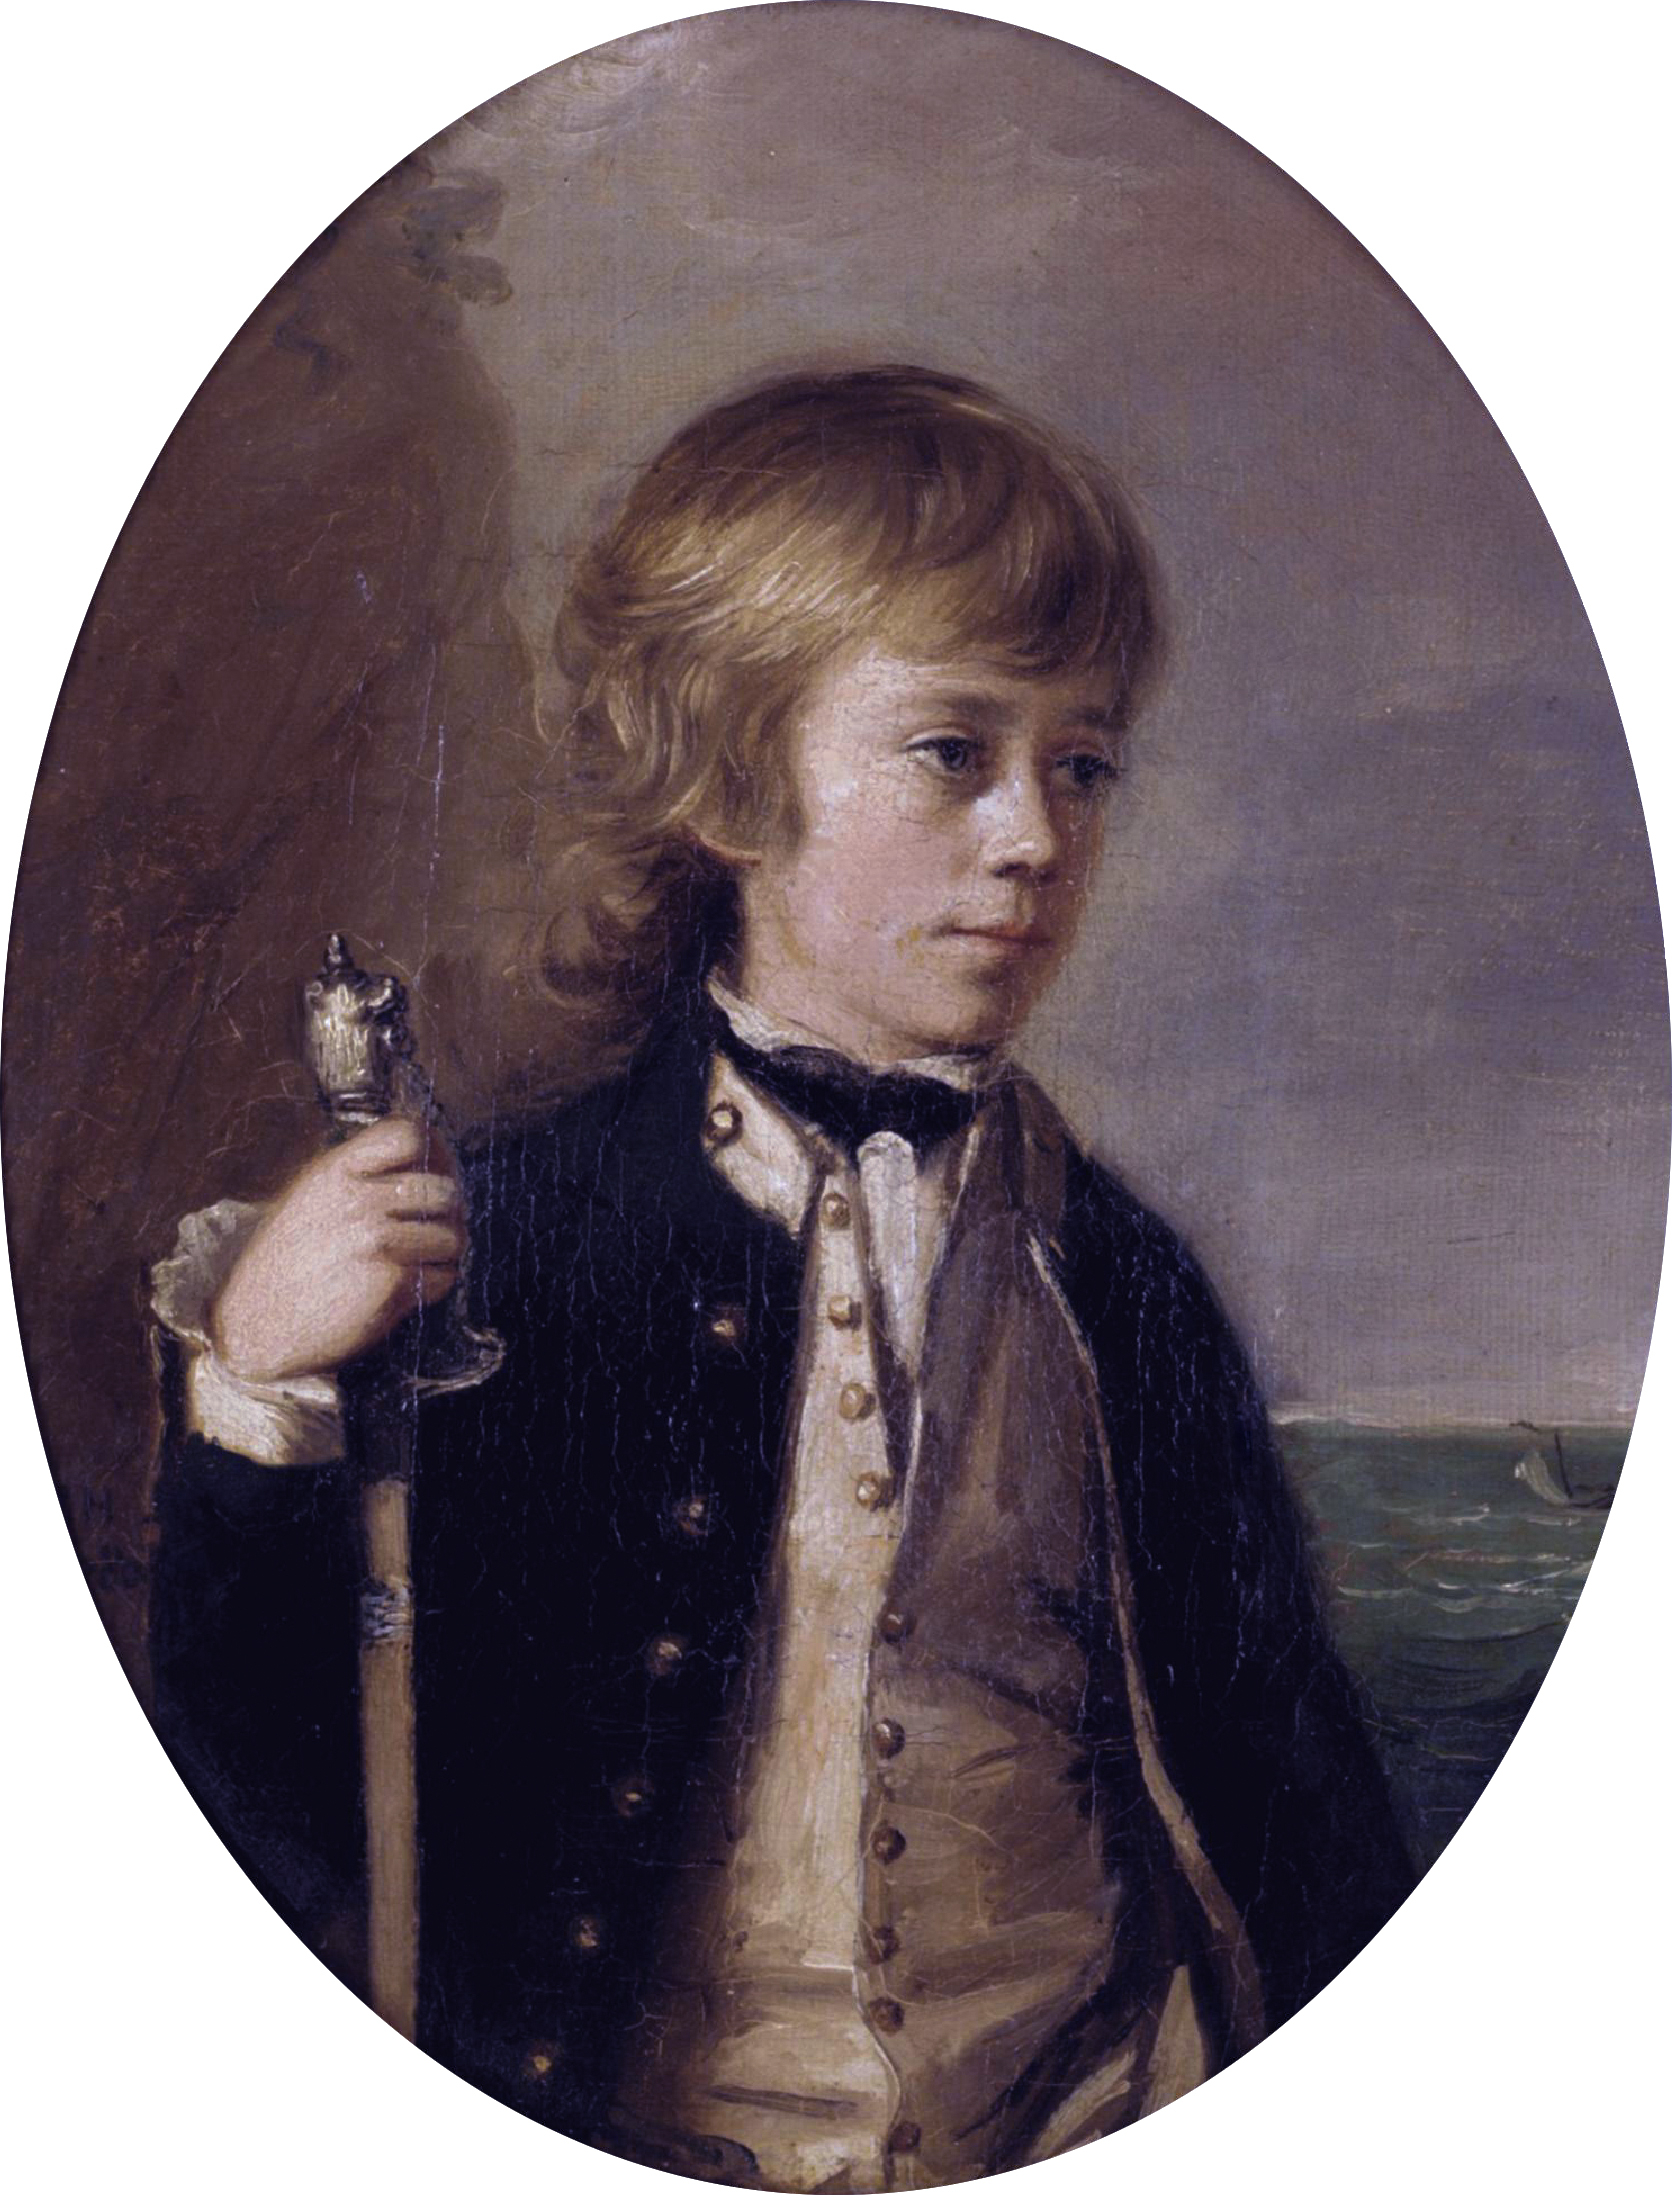 midshipman-henry-william-baynton-aged-13-1780-wikipedia.jpg